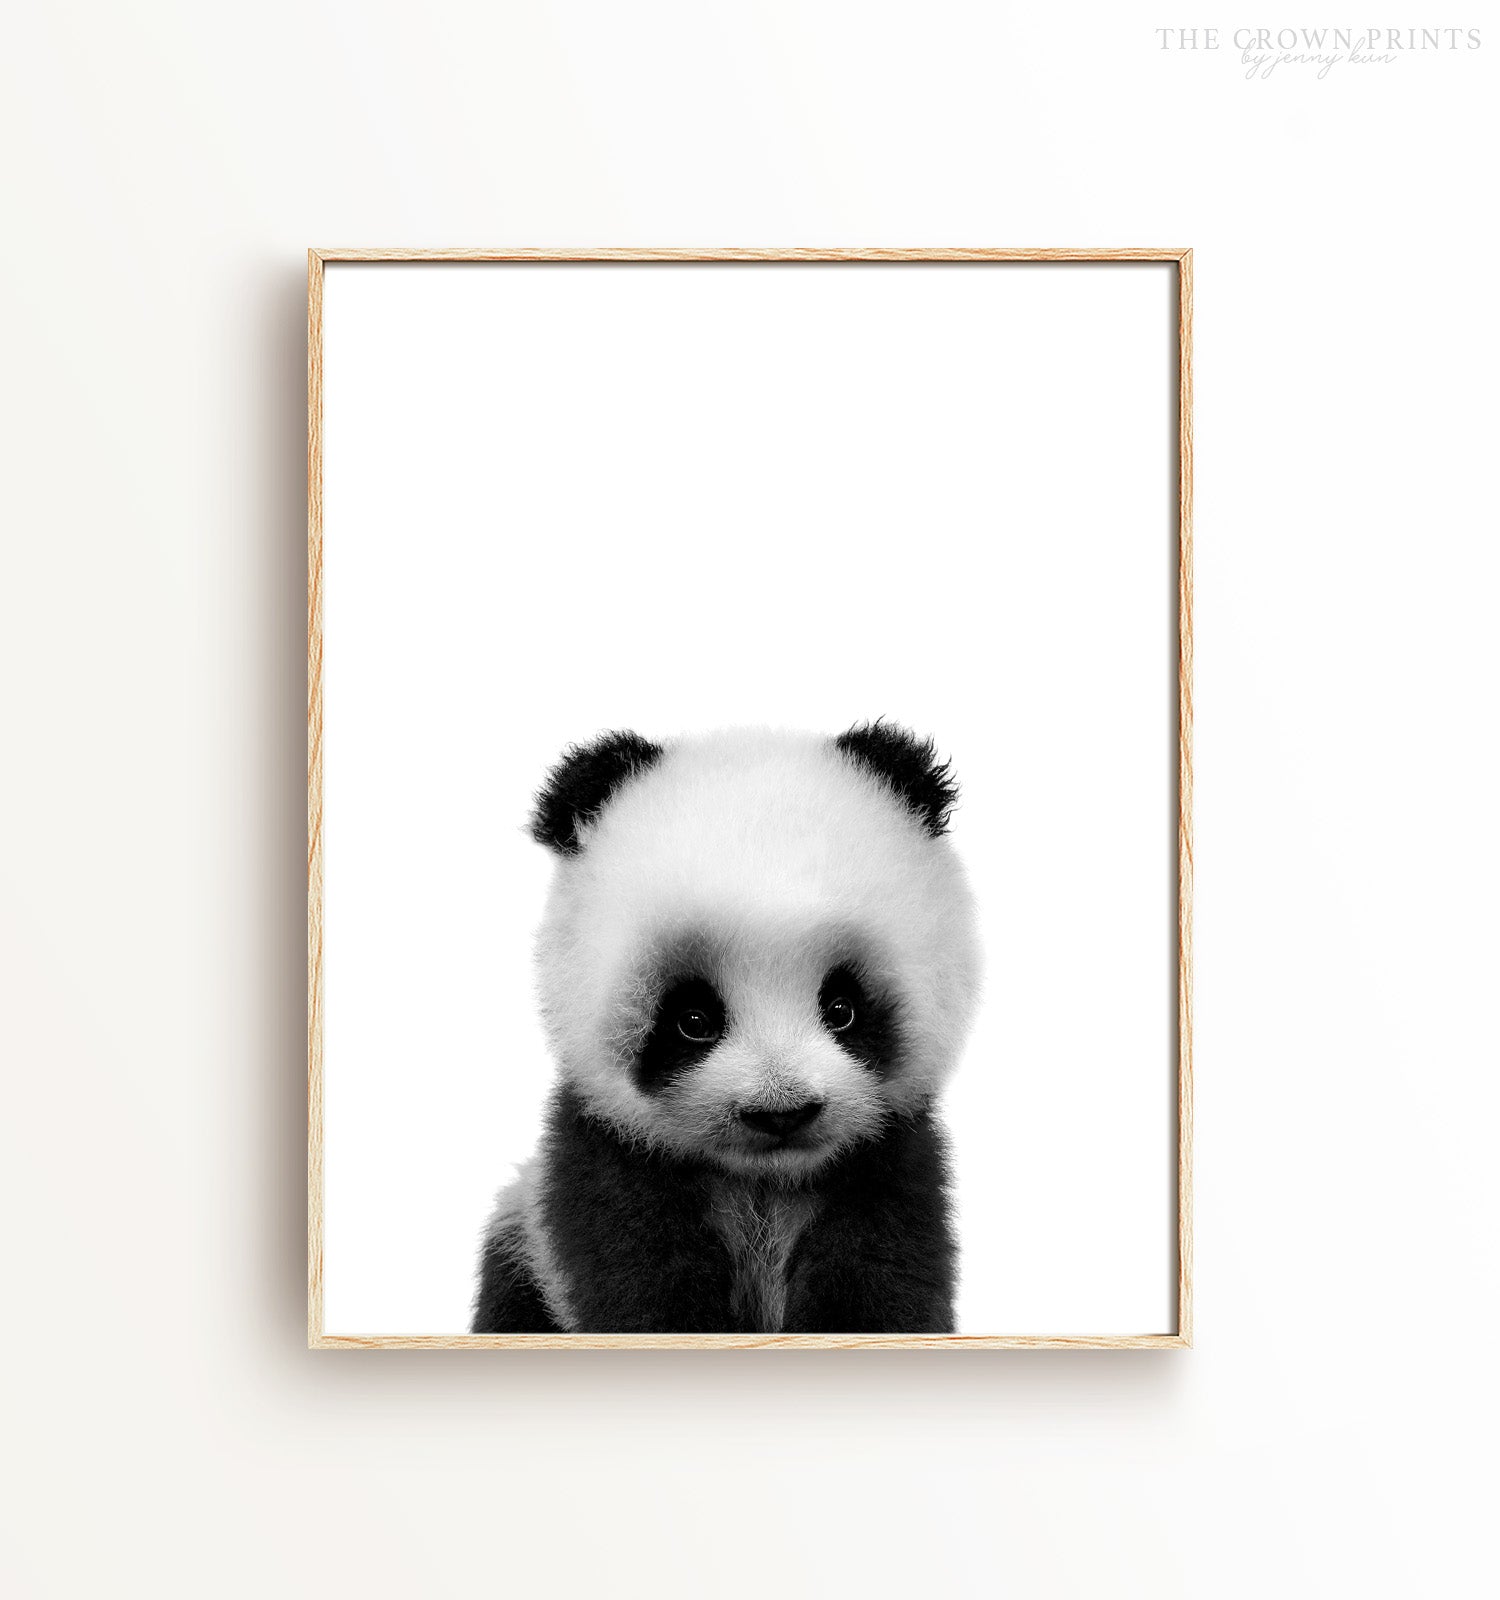 Baby Panda Black And White Print The Crown Prints